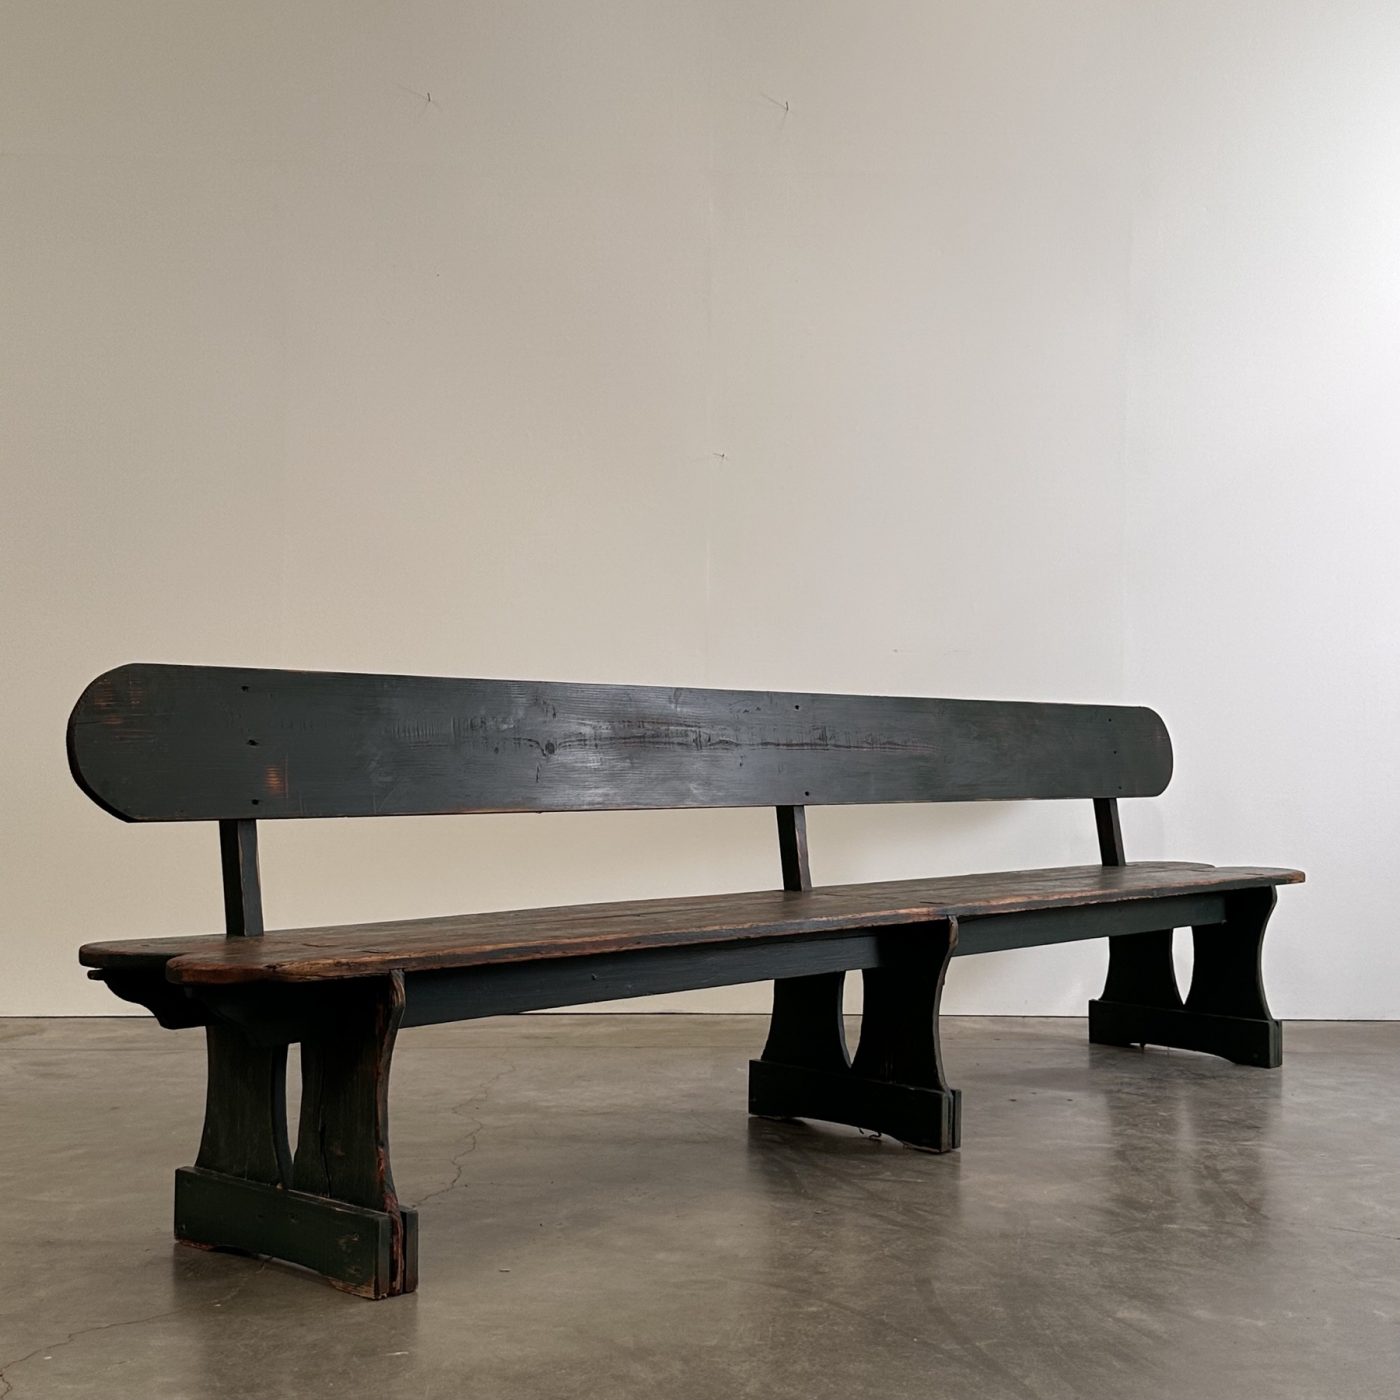 objet-vagabond-painted-bench0000